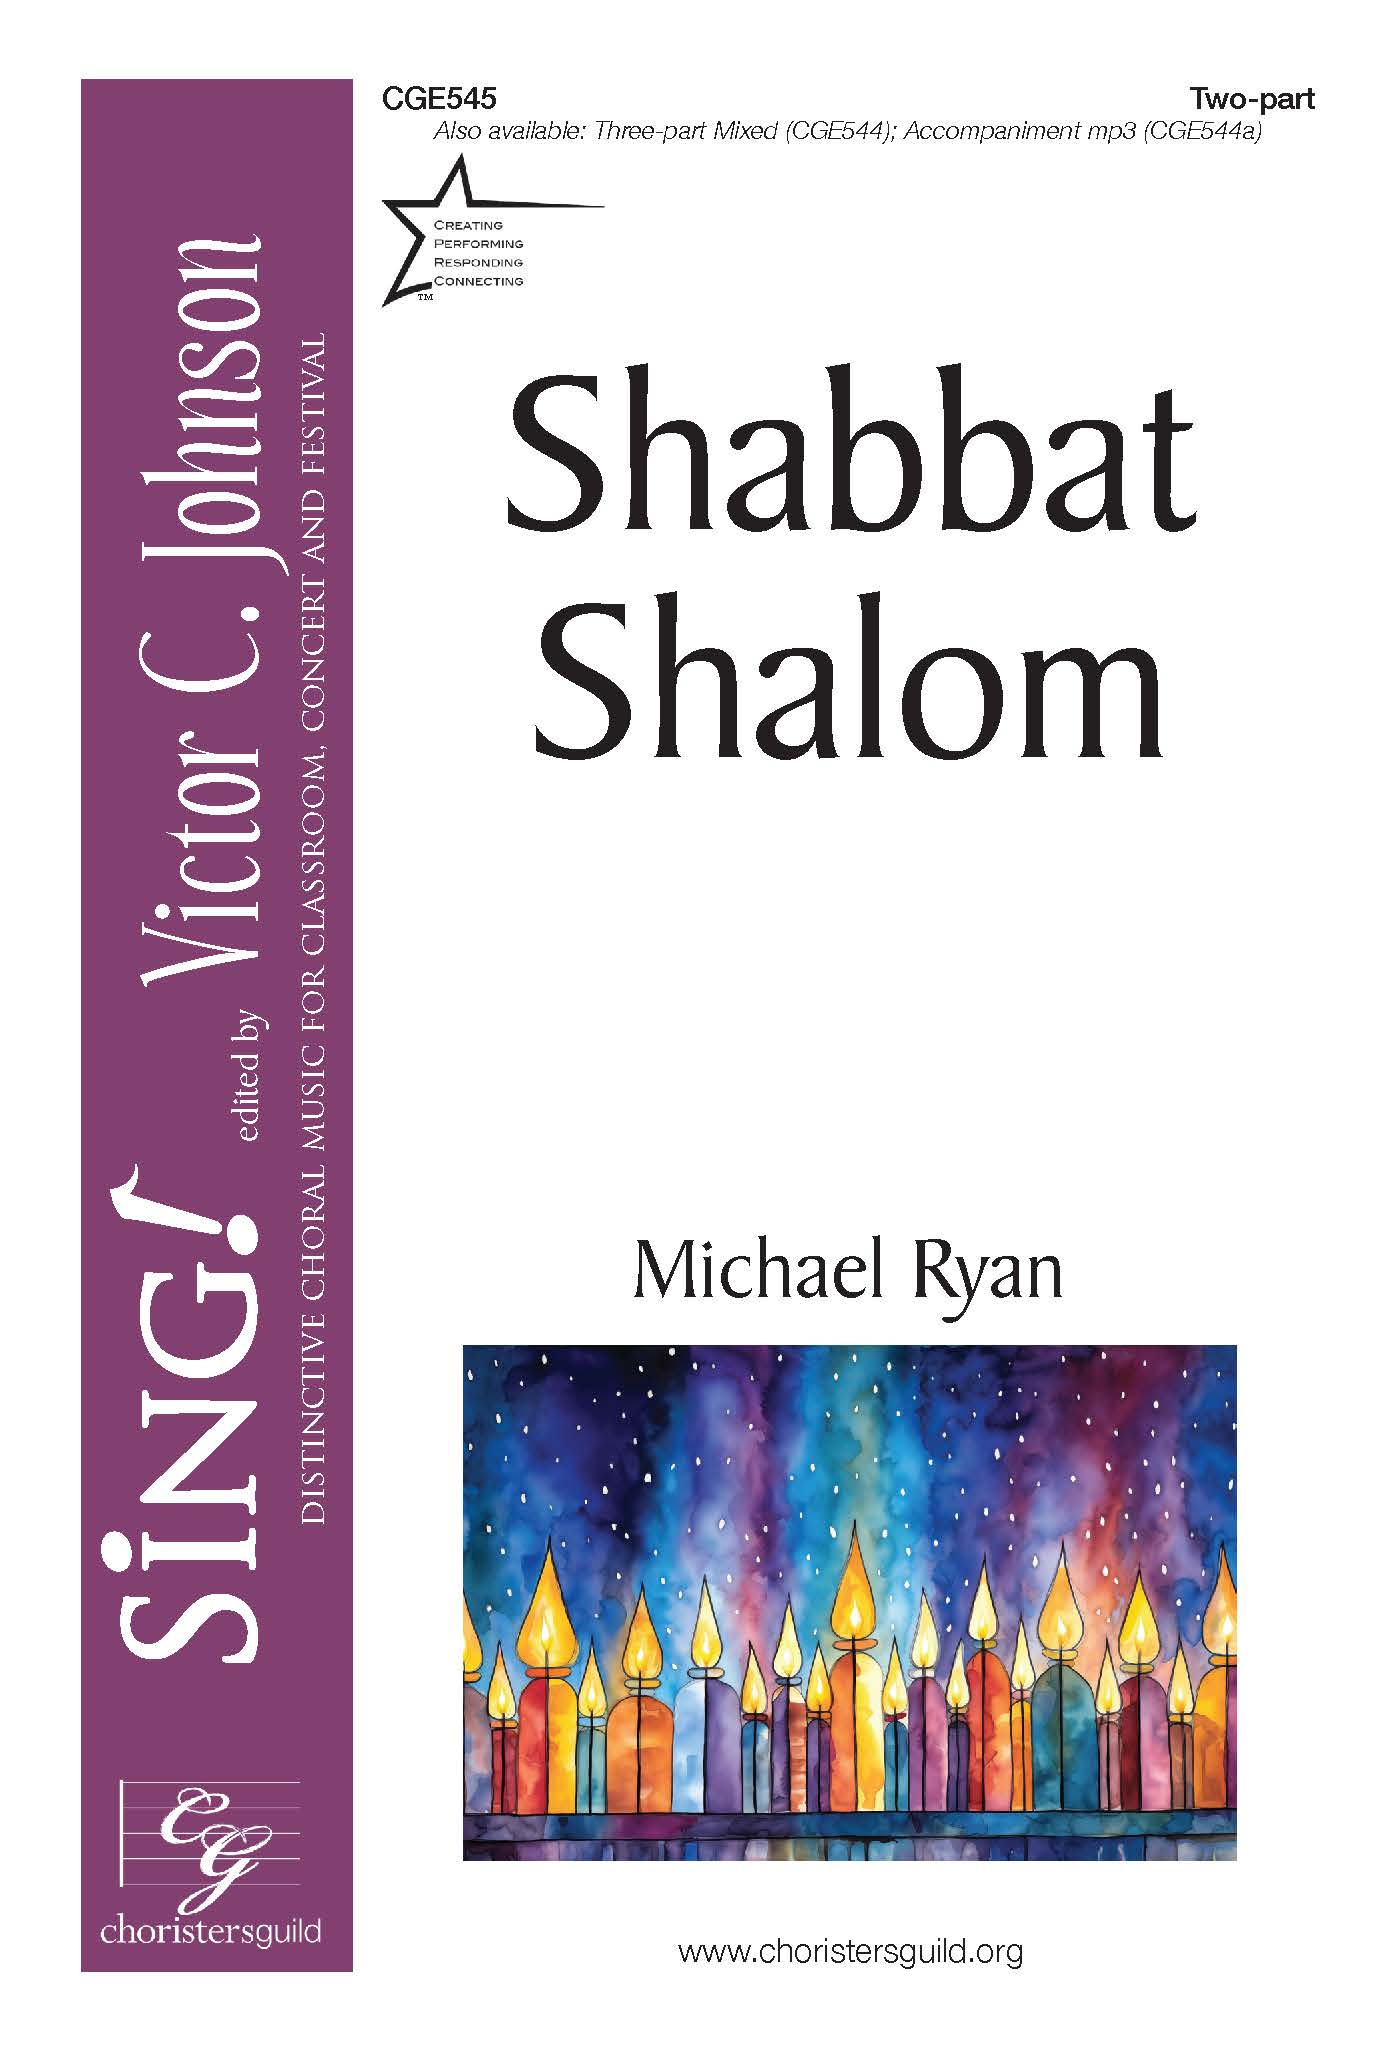 Shabbat Shalom - Two-part